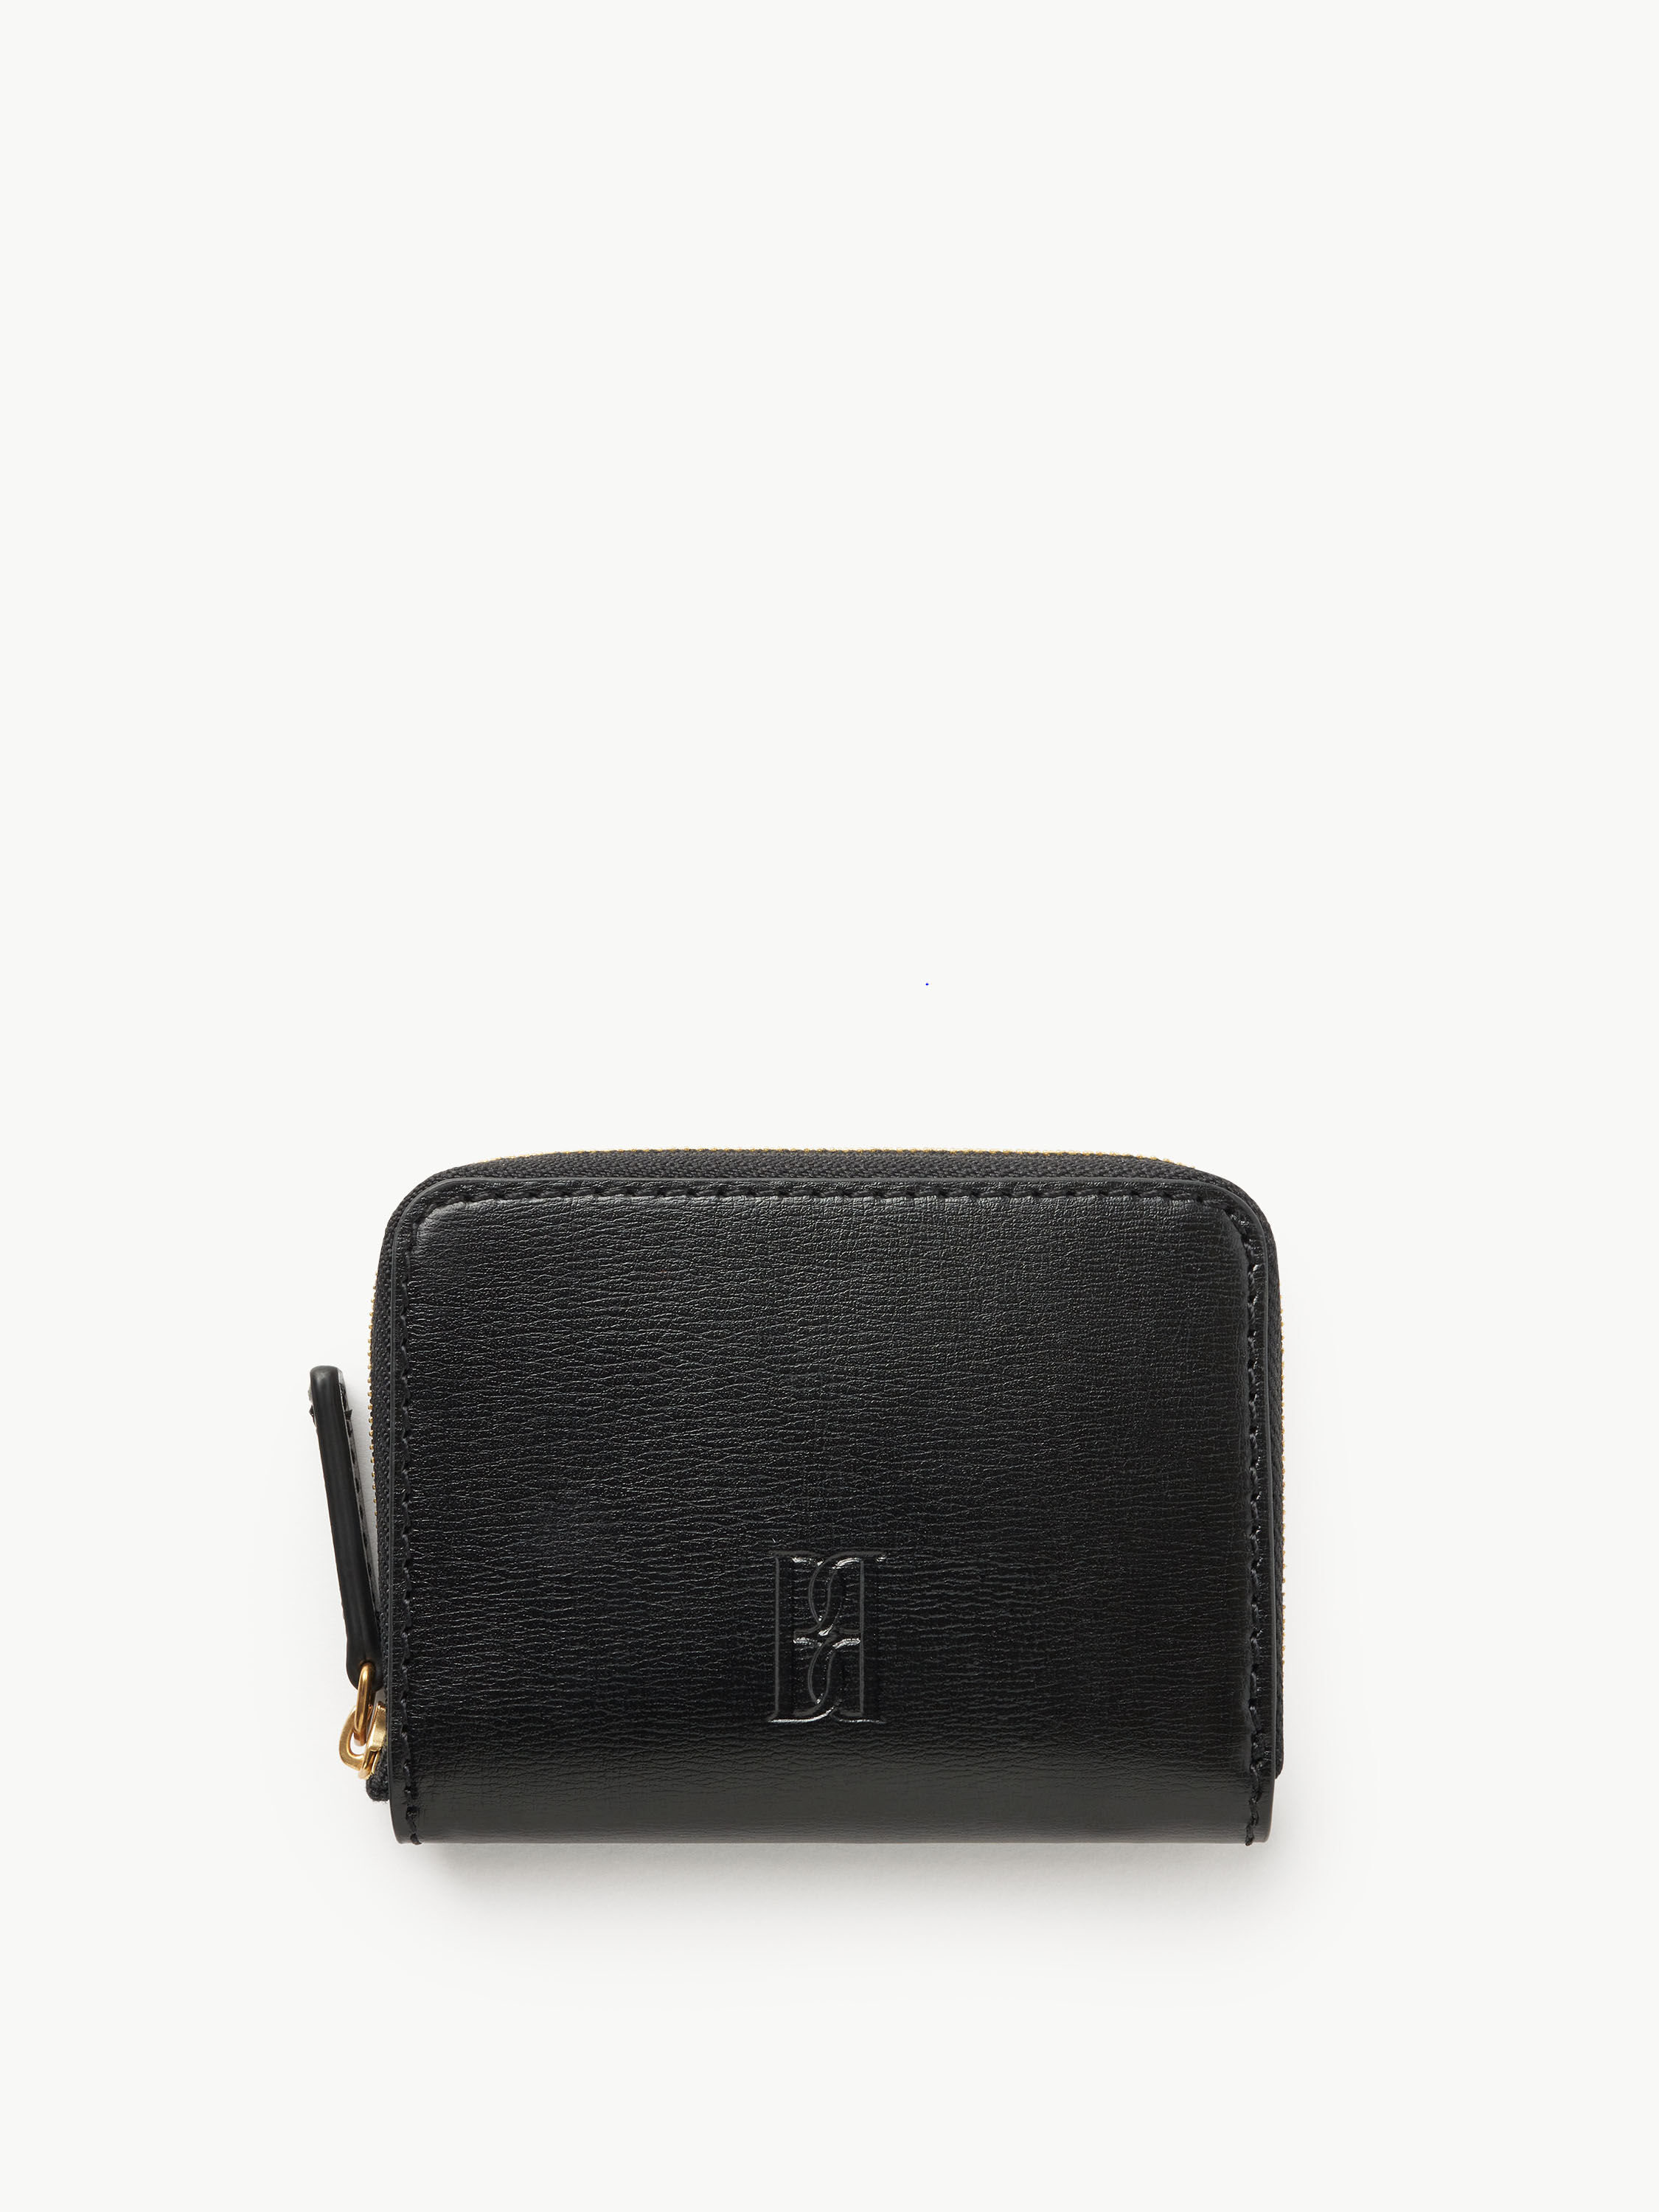 Round Straw Shoulder Bag with Leather Flap Summer Beach Fashion Designer  Handbag | eBay